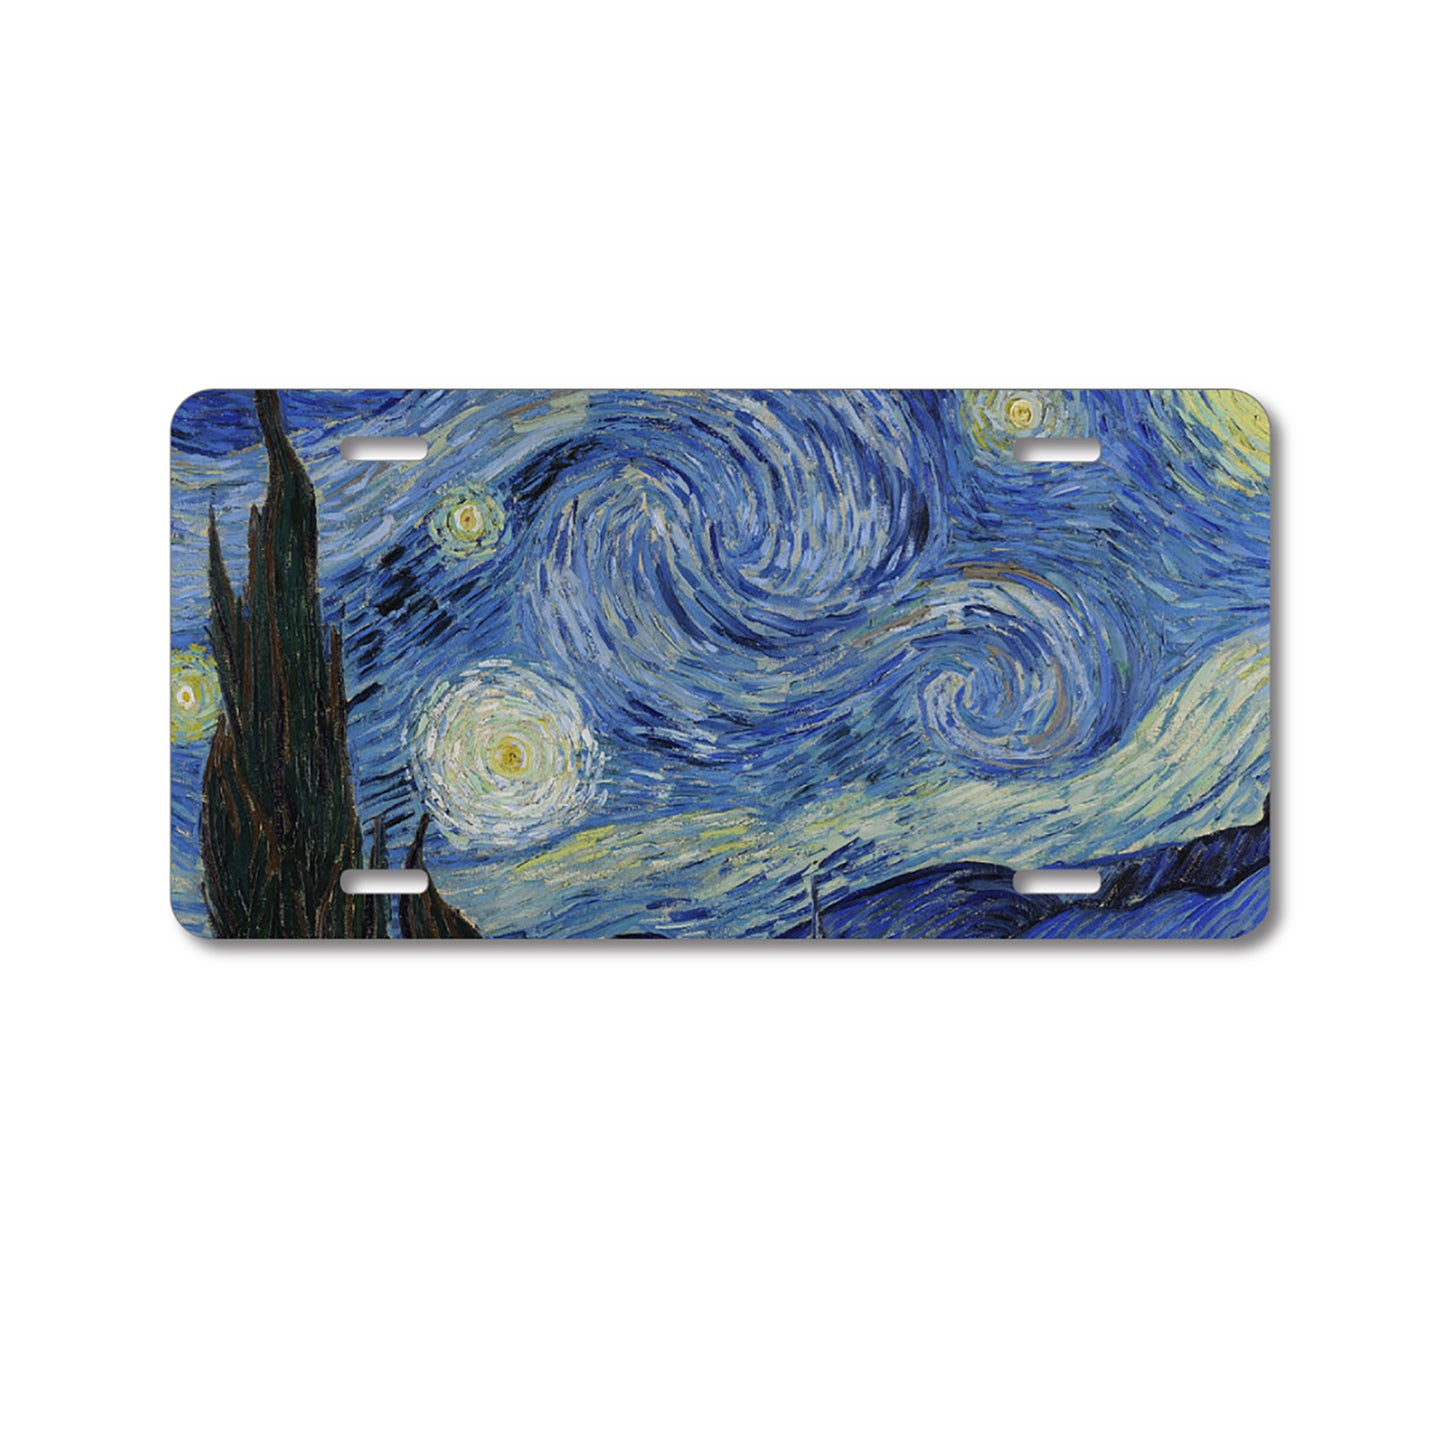 DistinctInk Custom Aluminum Decorative Vanity Front License Plate - Van Gogh Starry Night